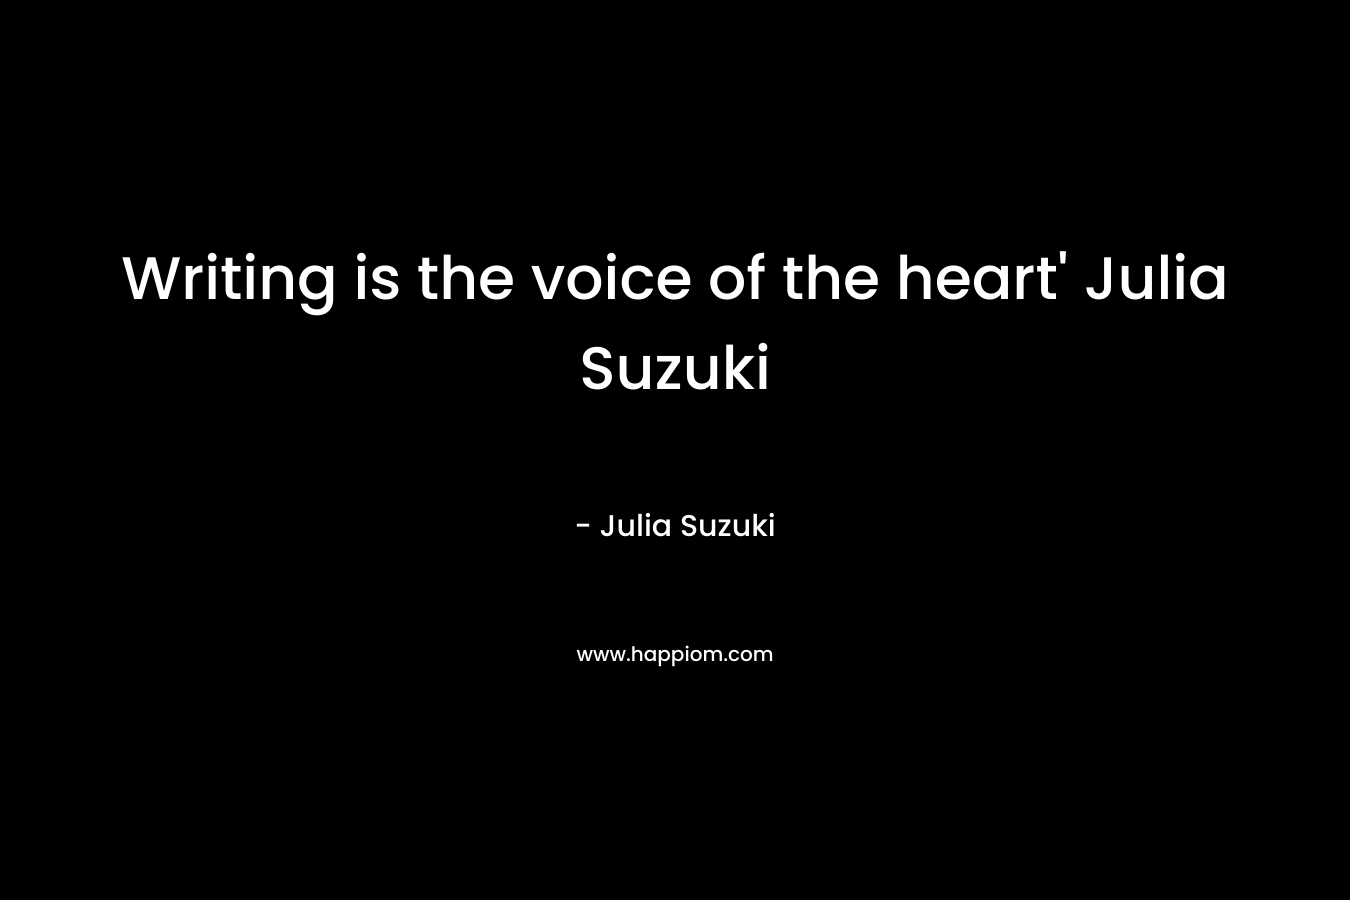 Writing is the voice of the heart' Julia Suzuki